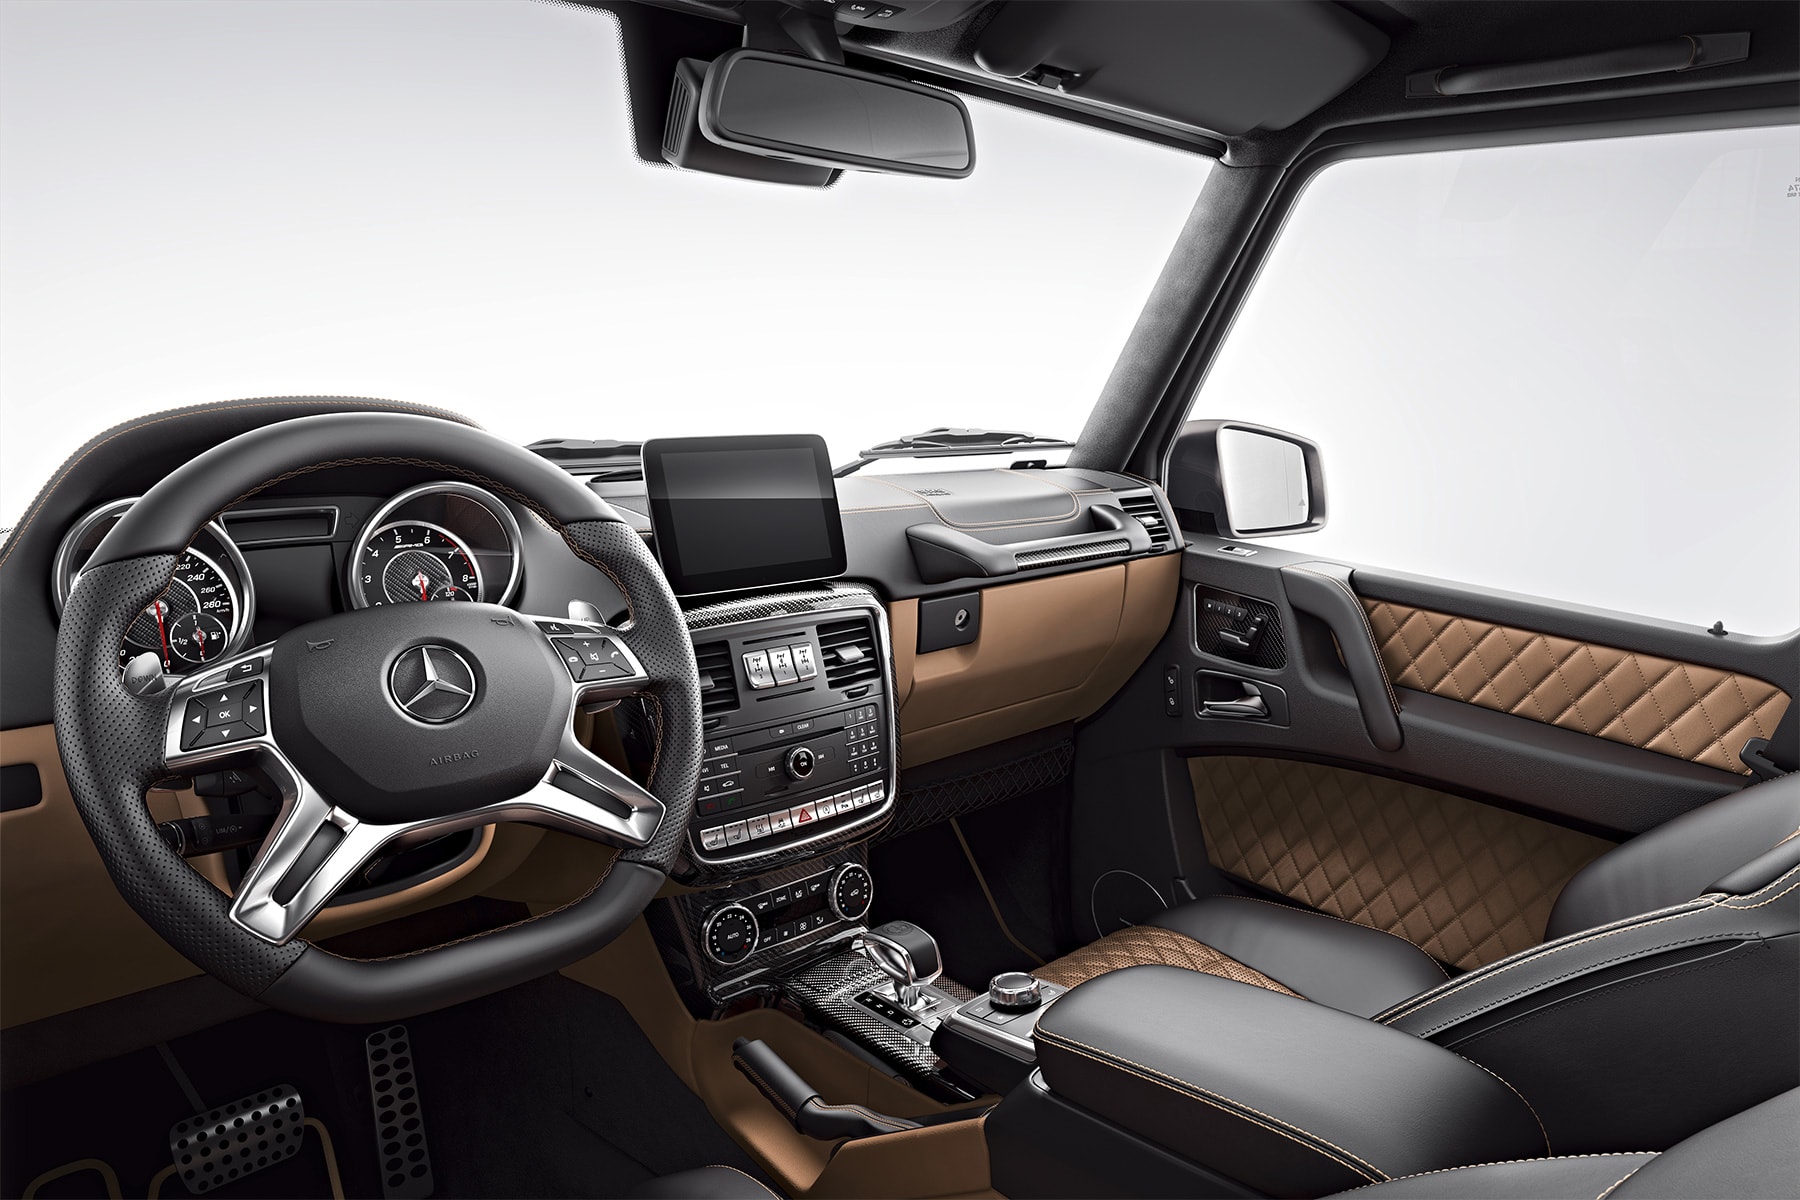 Mercedes-AMG がGクラスに最高クラスのリミテッドエディションを追加 重厚感と上品さの双方を兼ね備えた究極のオフロードカー